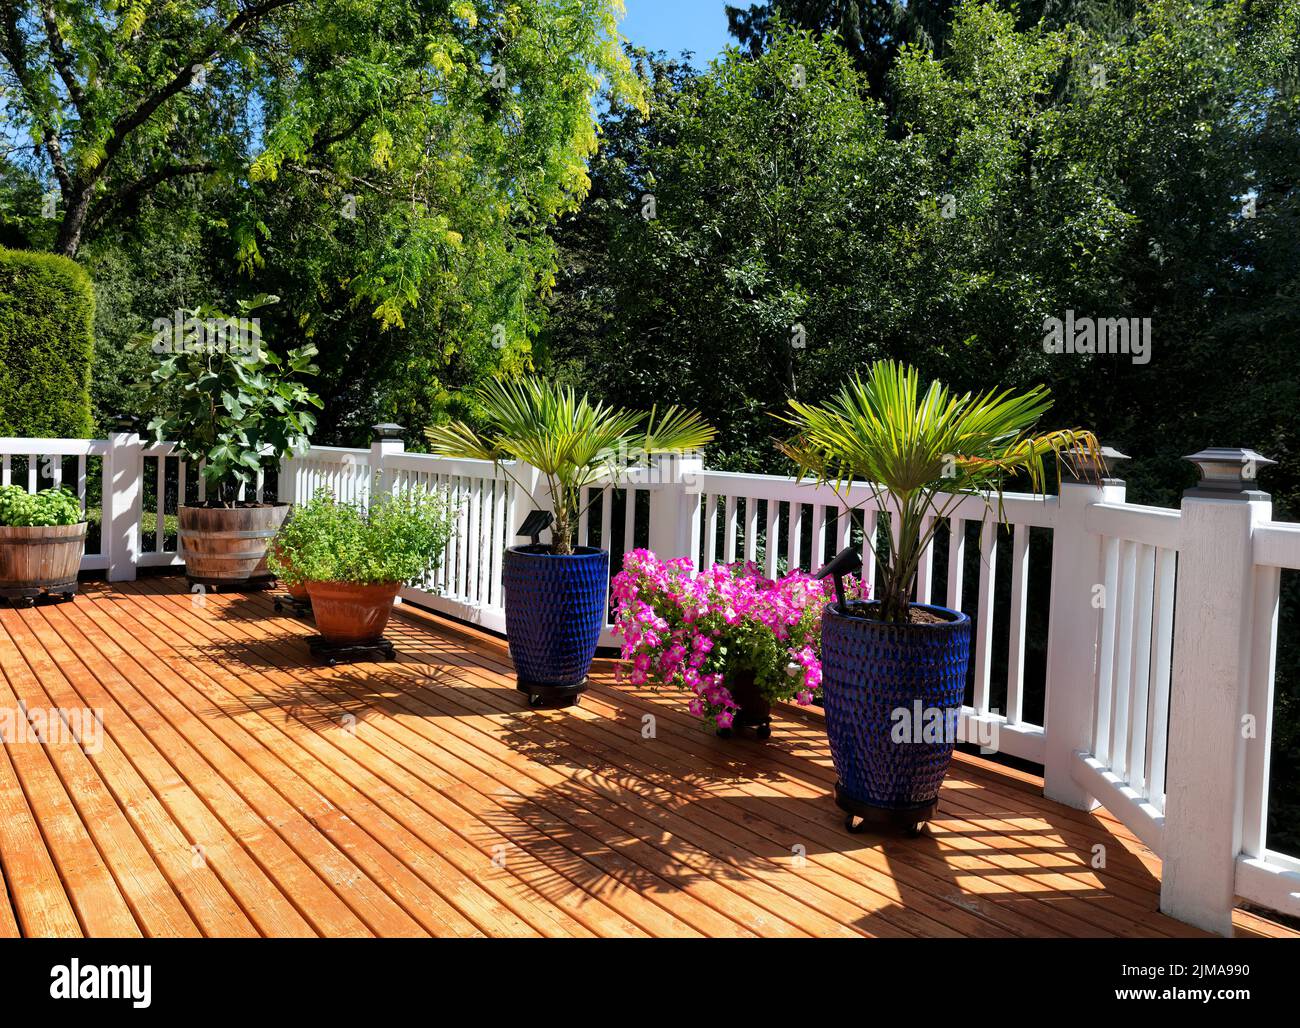 Home garden on outdoor wood cedar deck during summer time Stock Photo